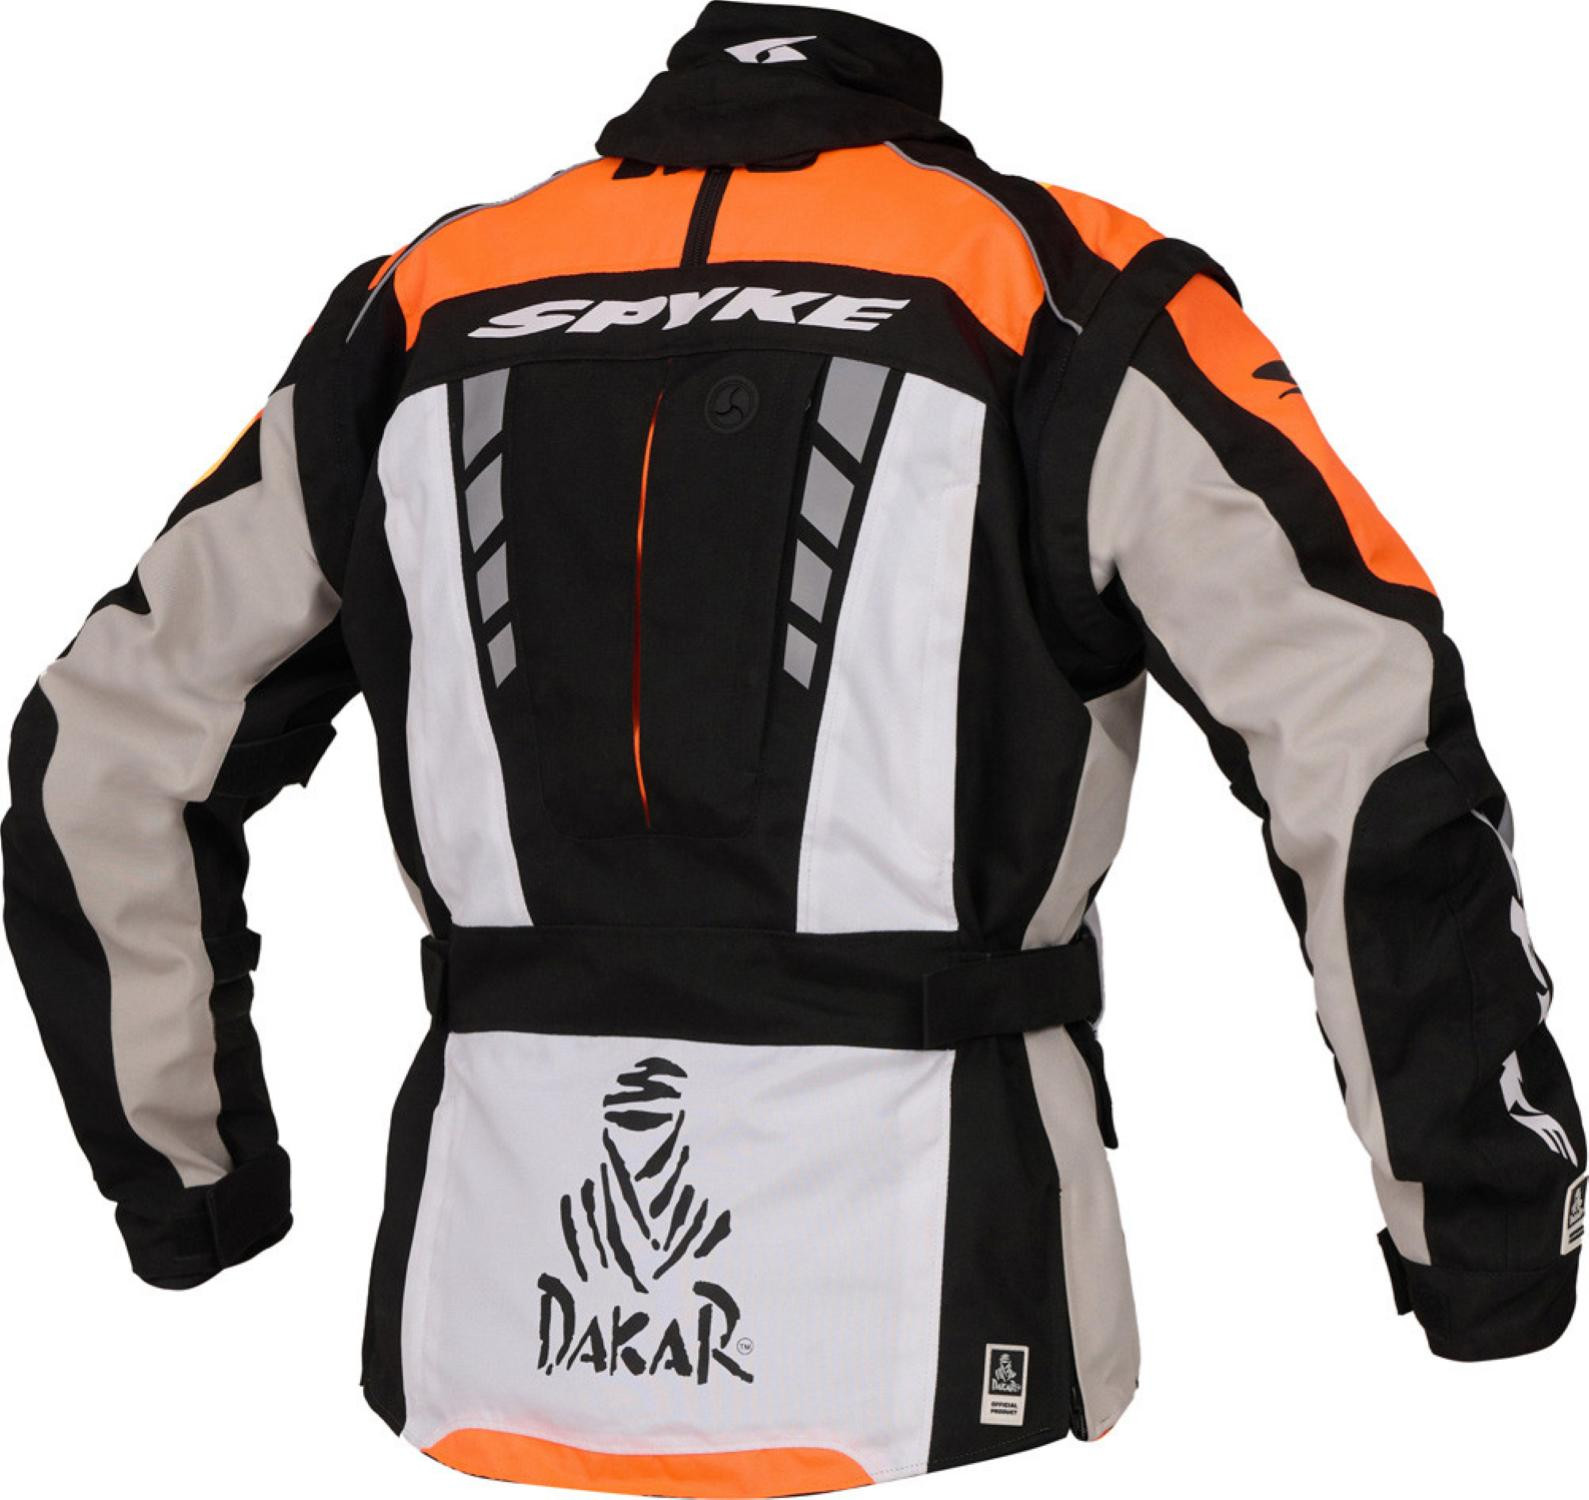 Giacca enduro Spyke Dakar Namib Xtr Nero Arancio - Sicstar Moto